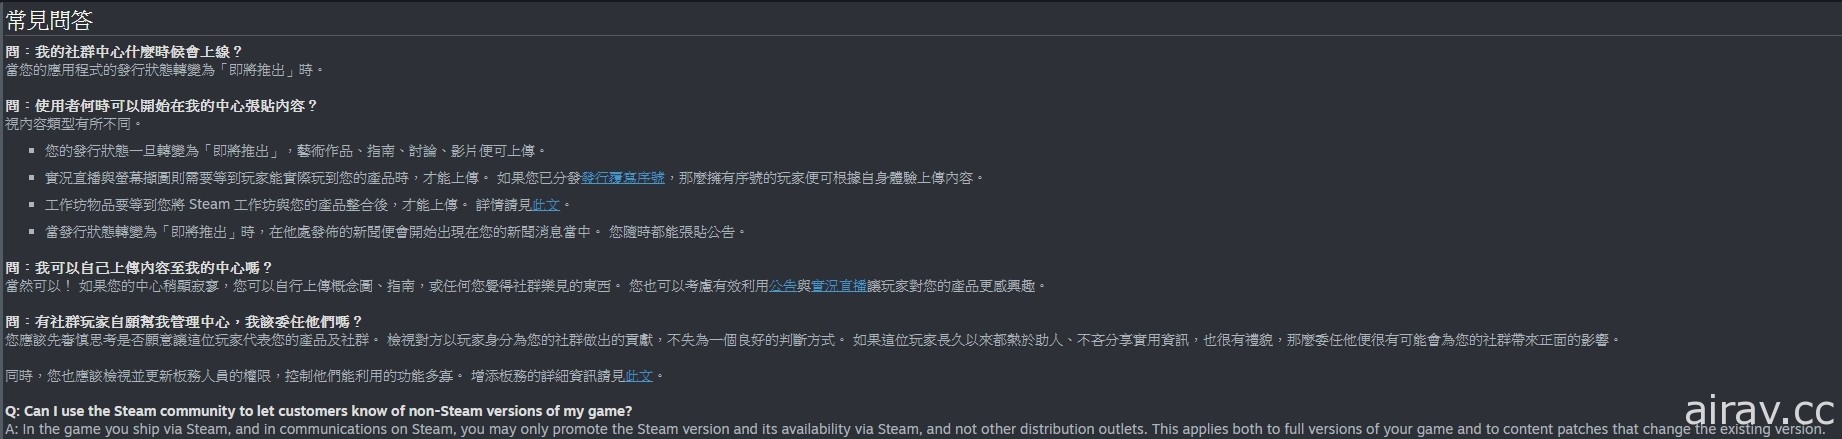 Valve 規定 Steam 社群只能宣傳 Steam 版本遊戲